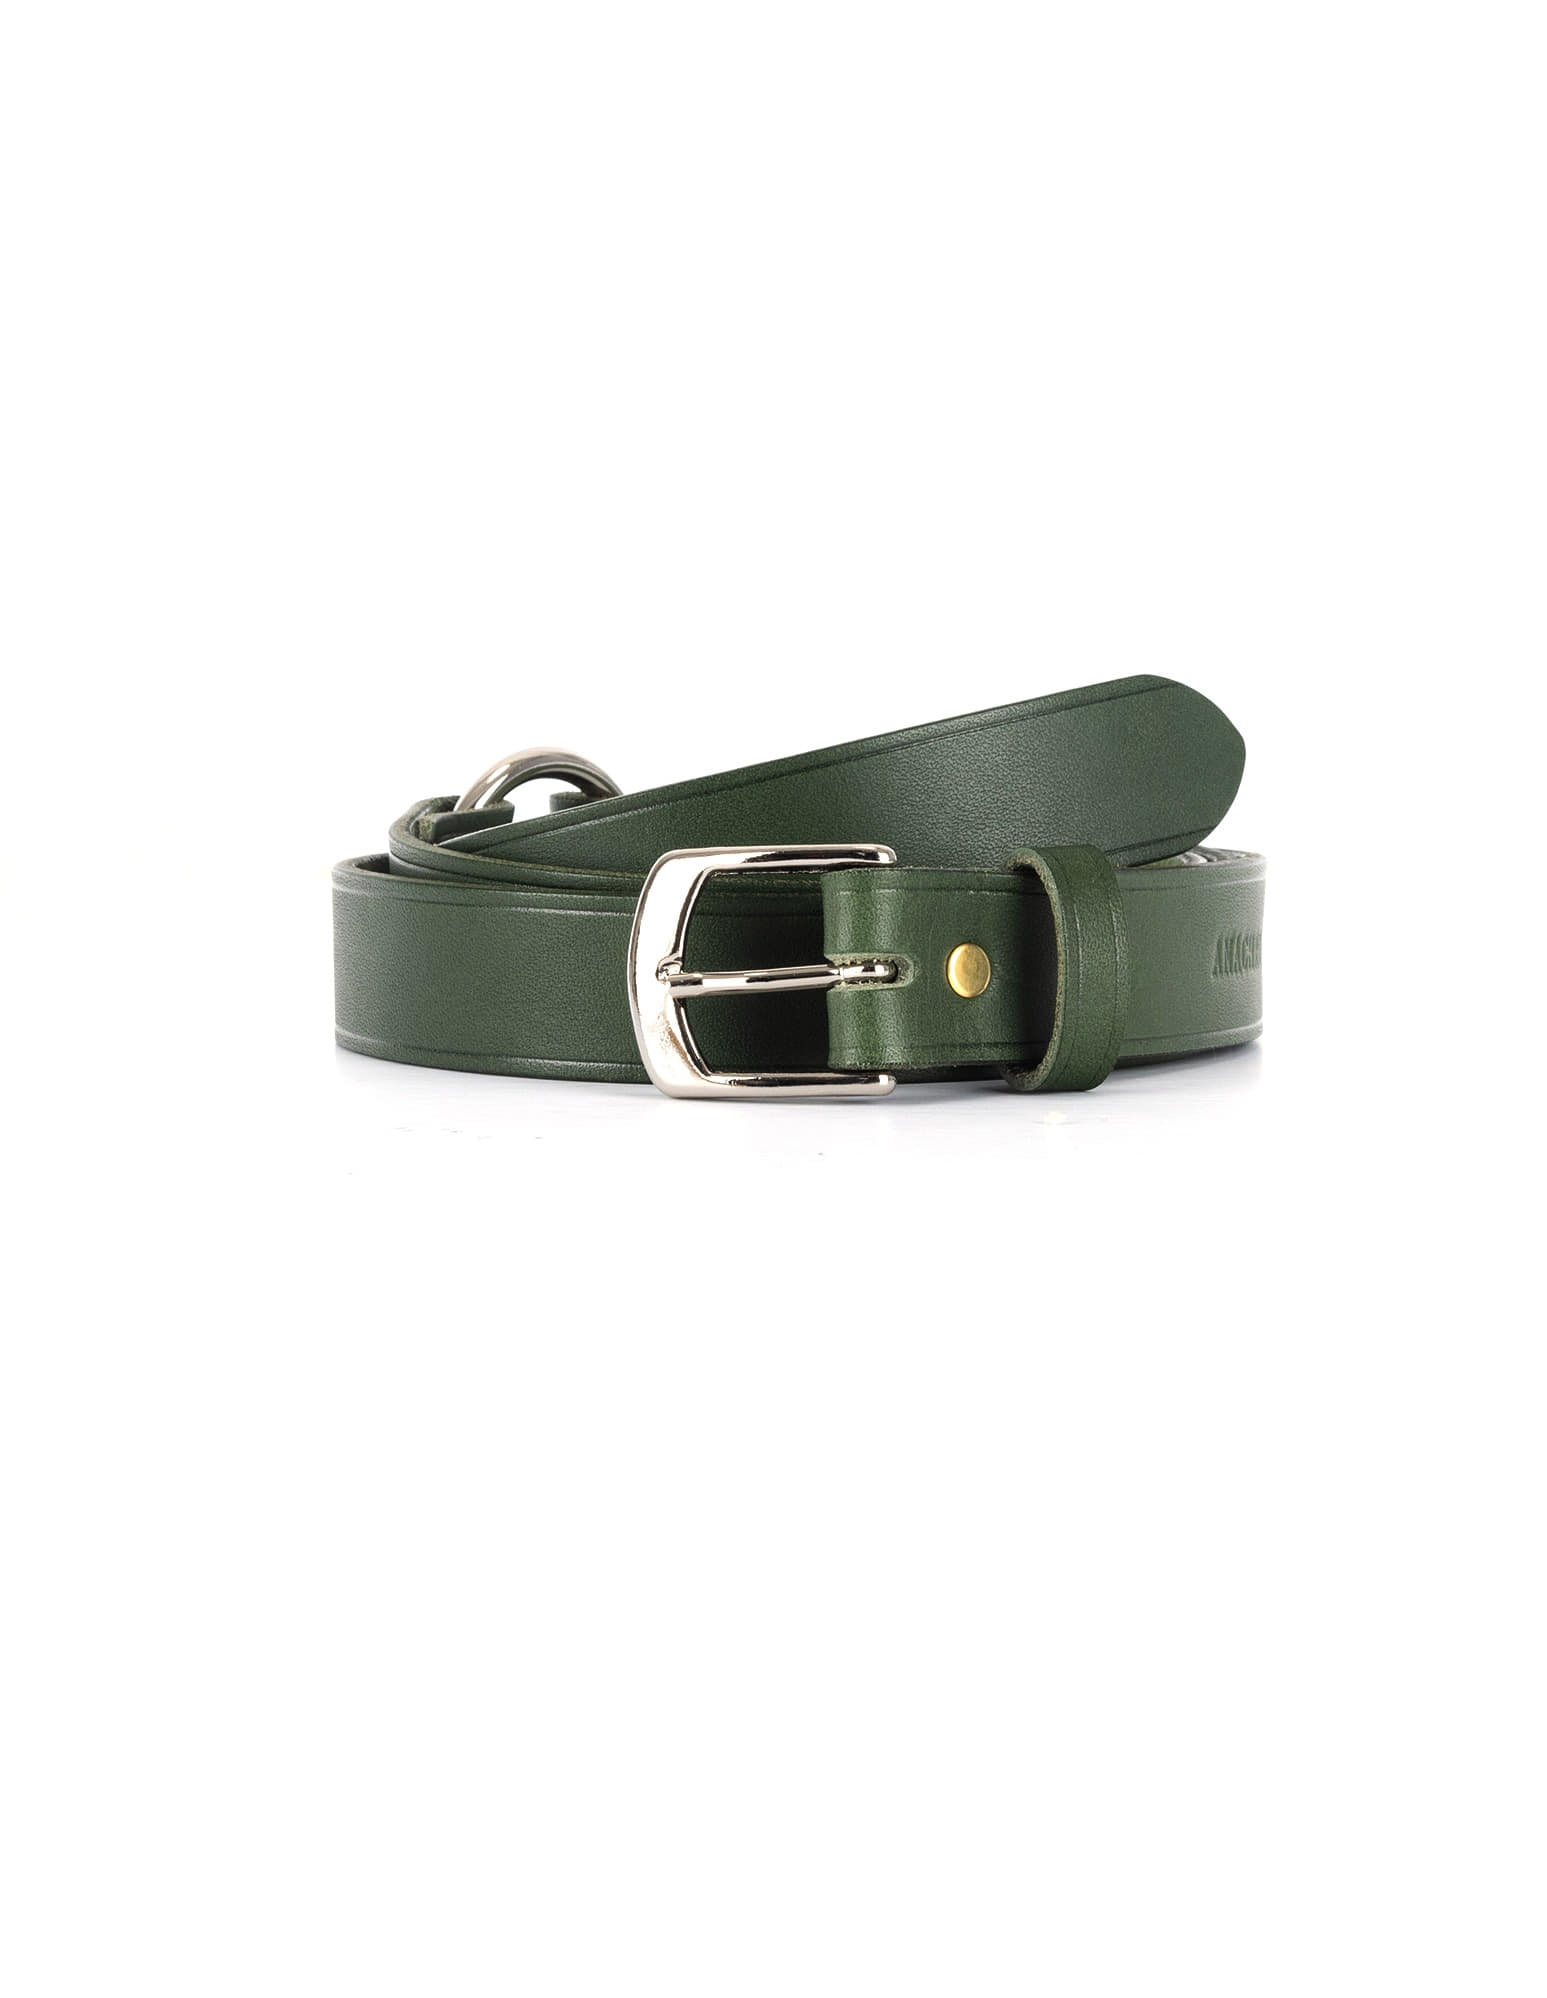 ANBB-040 Pinbuckle Ring Leather Belt (Green)